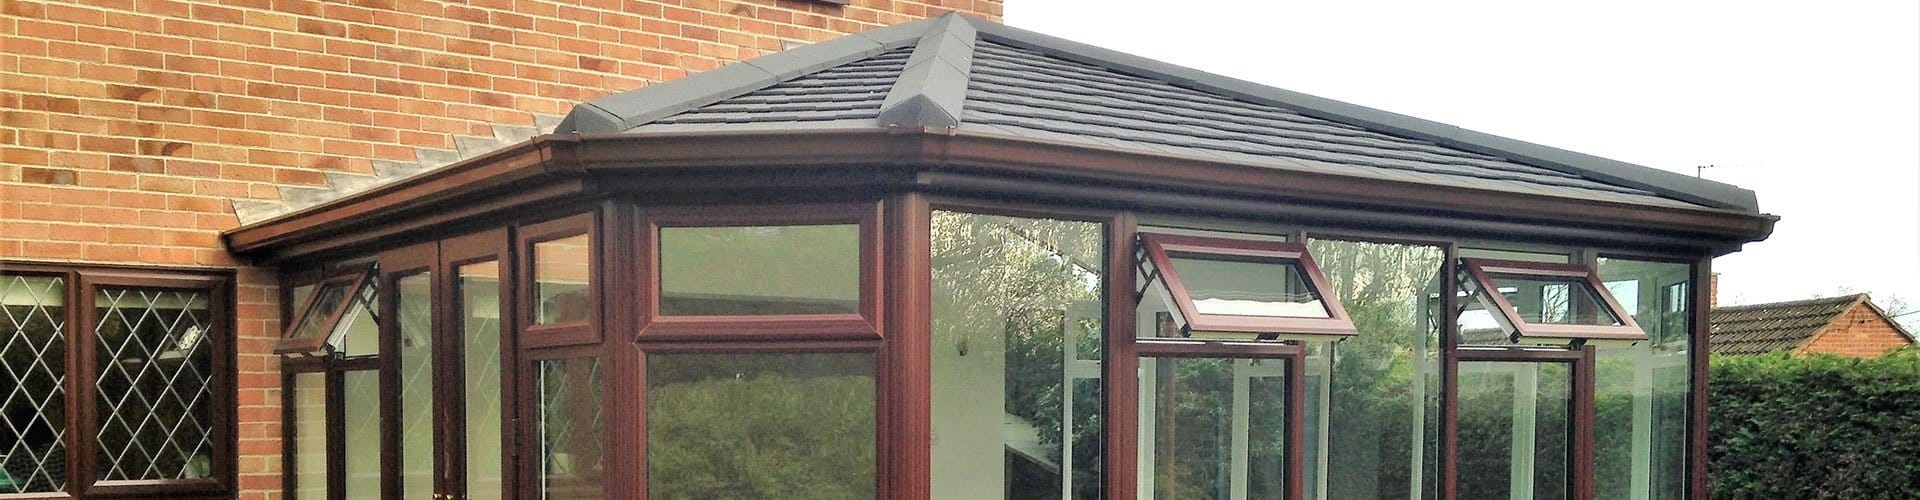 conservatory roof repairs in Basingstoke